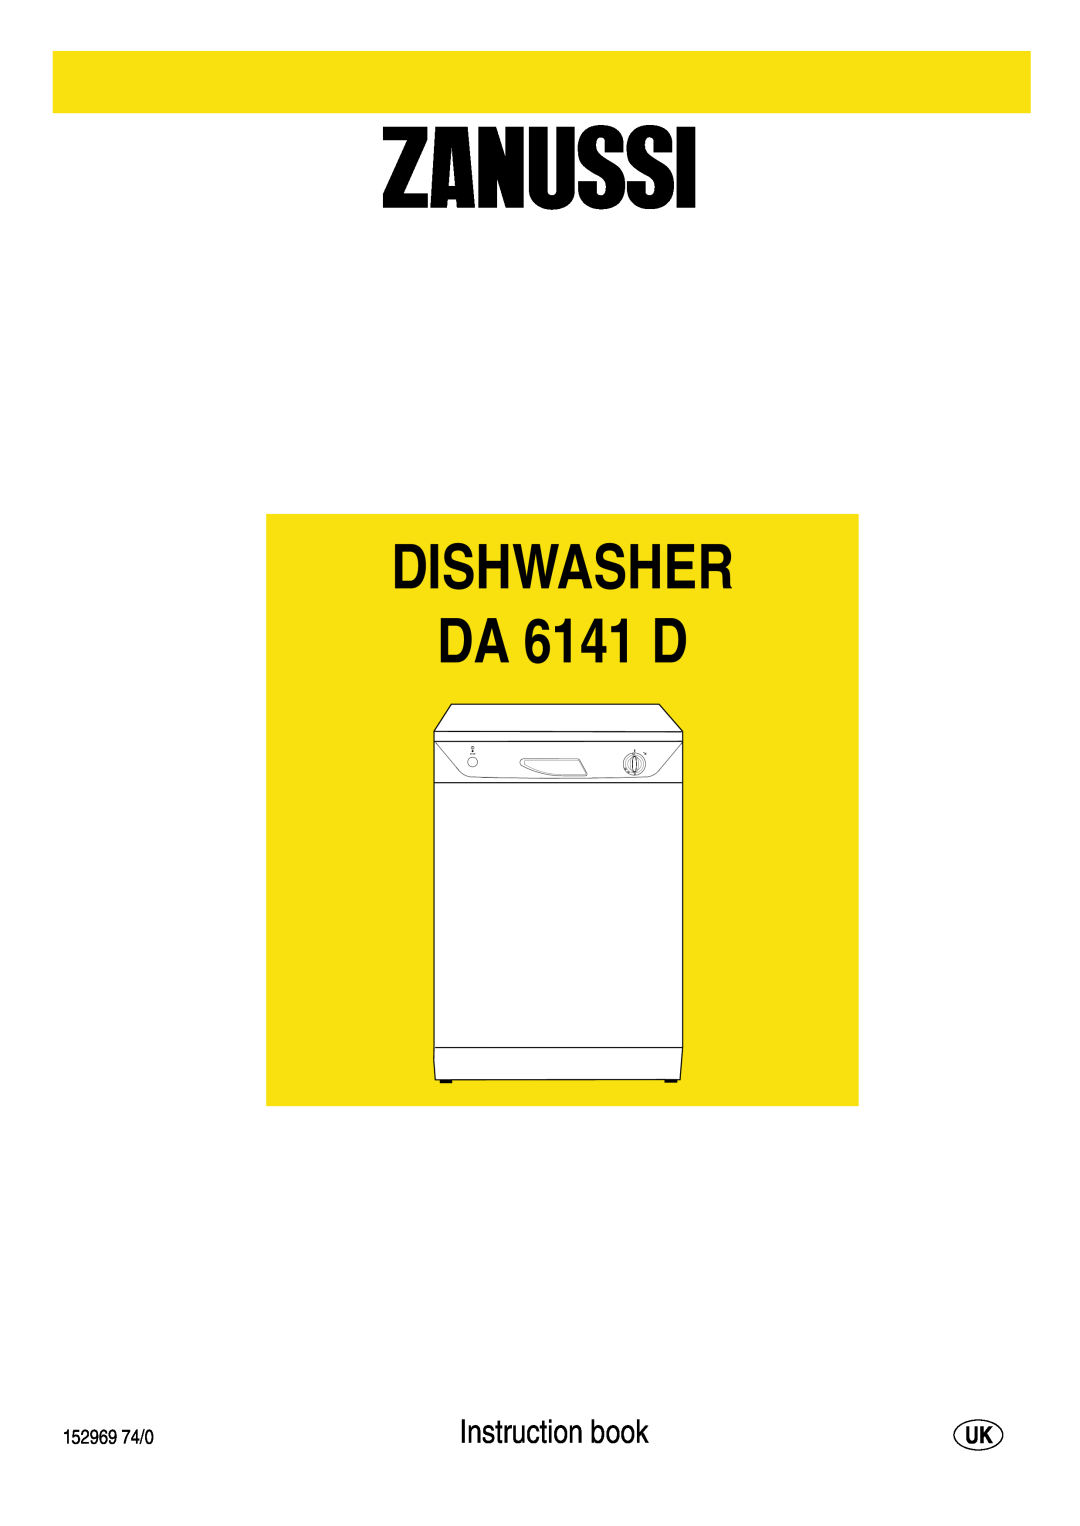 Zanussi manual DISHWASHER DA 6141 D, Instruction book 